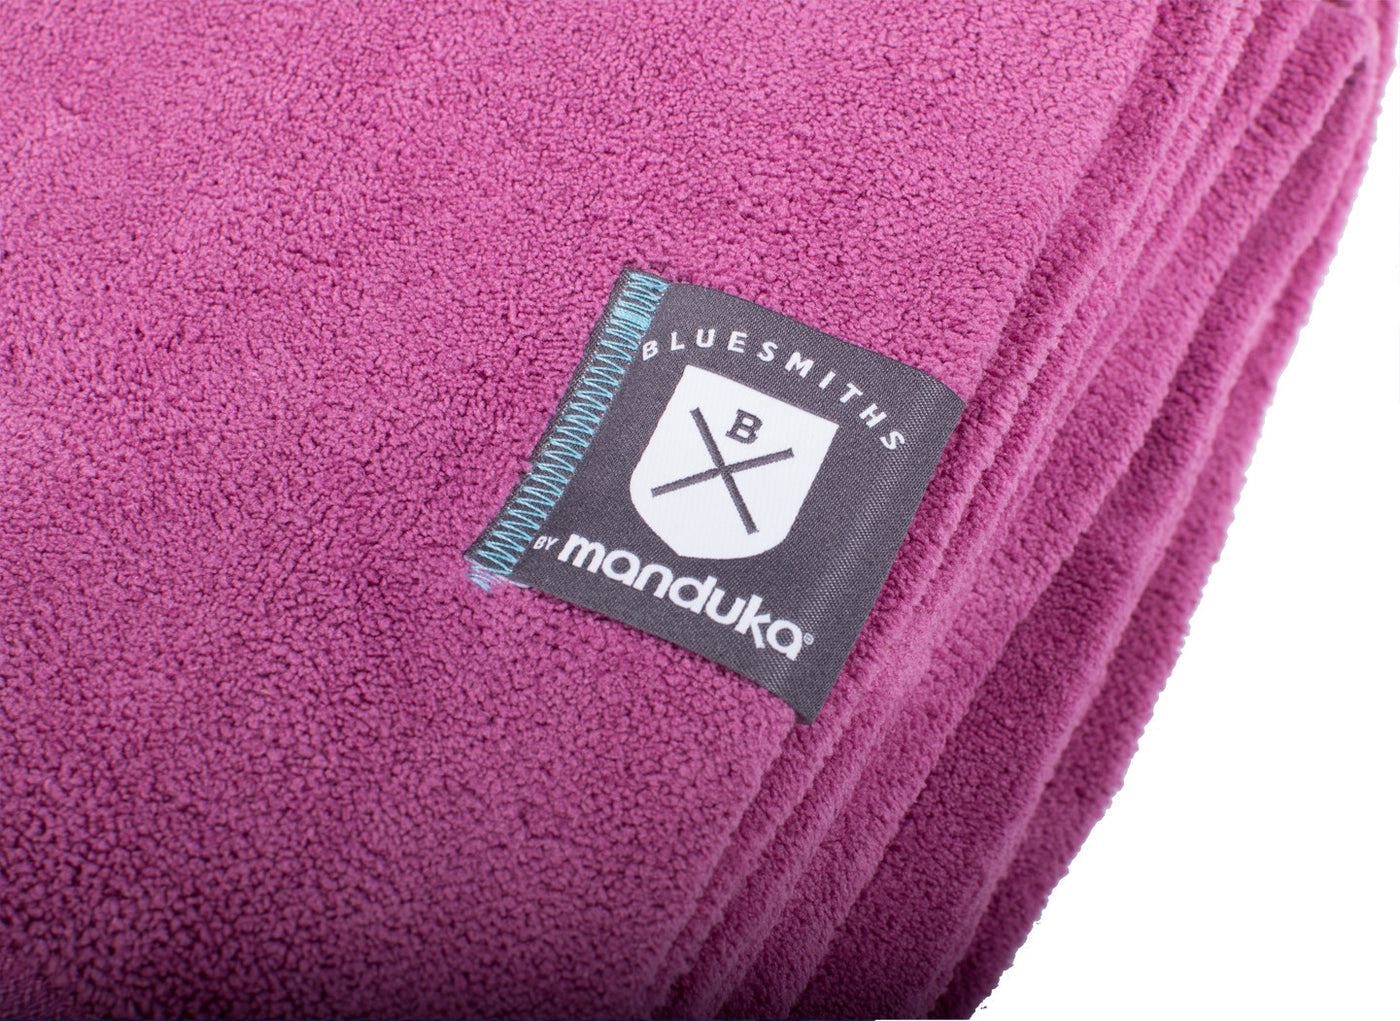  Performance Towels - The World's Finest Waterwear | BLUESMITHS